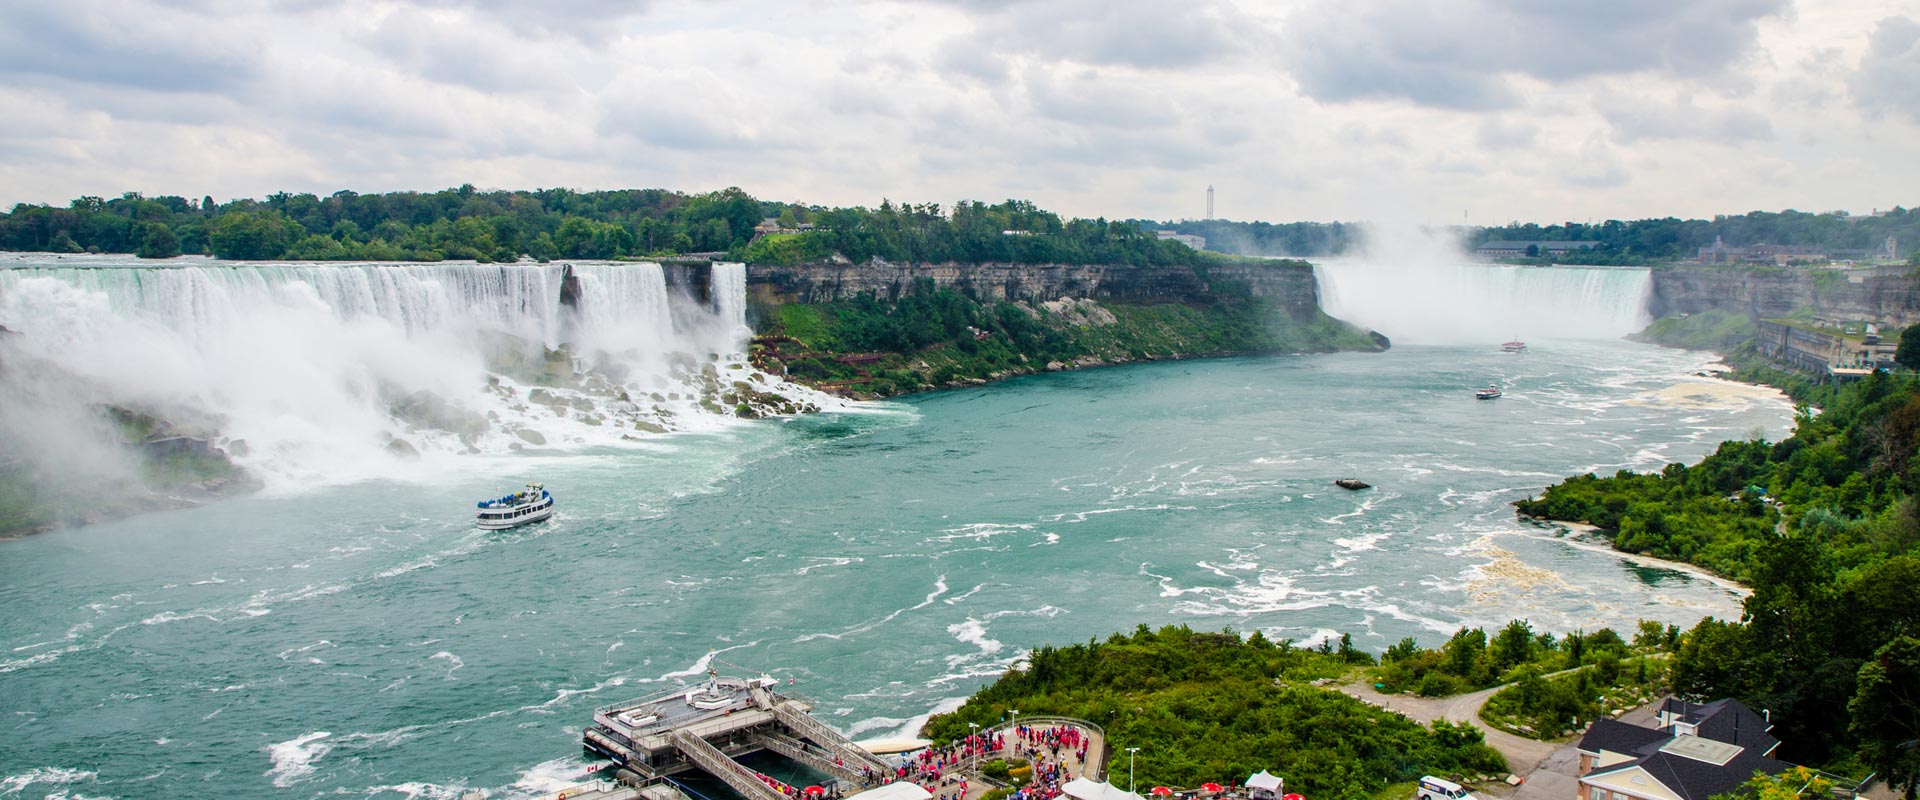 Finding a Tour Organizer for Niagara Falls